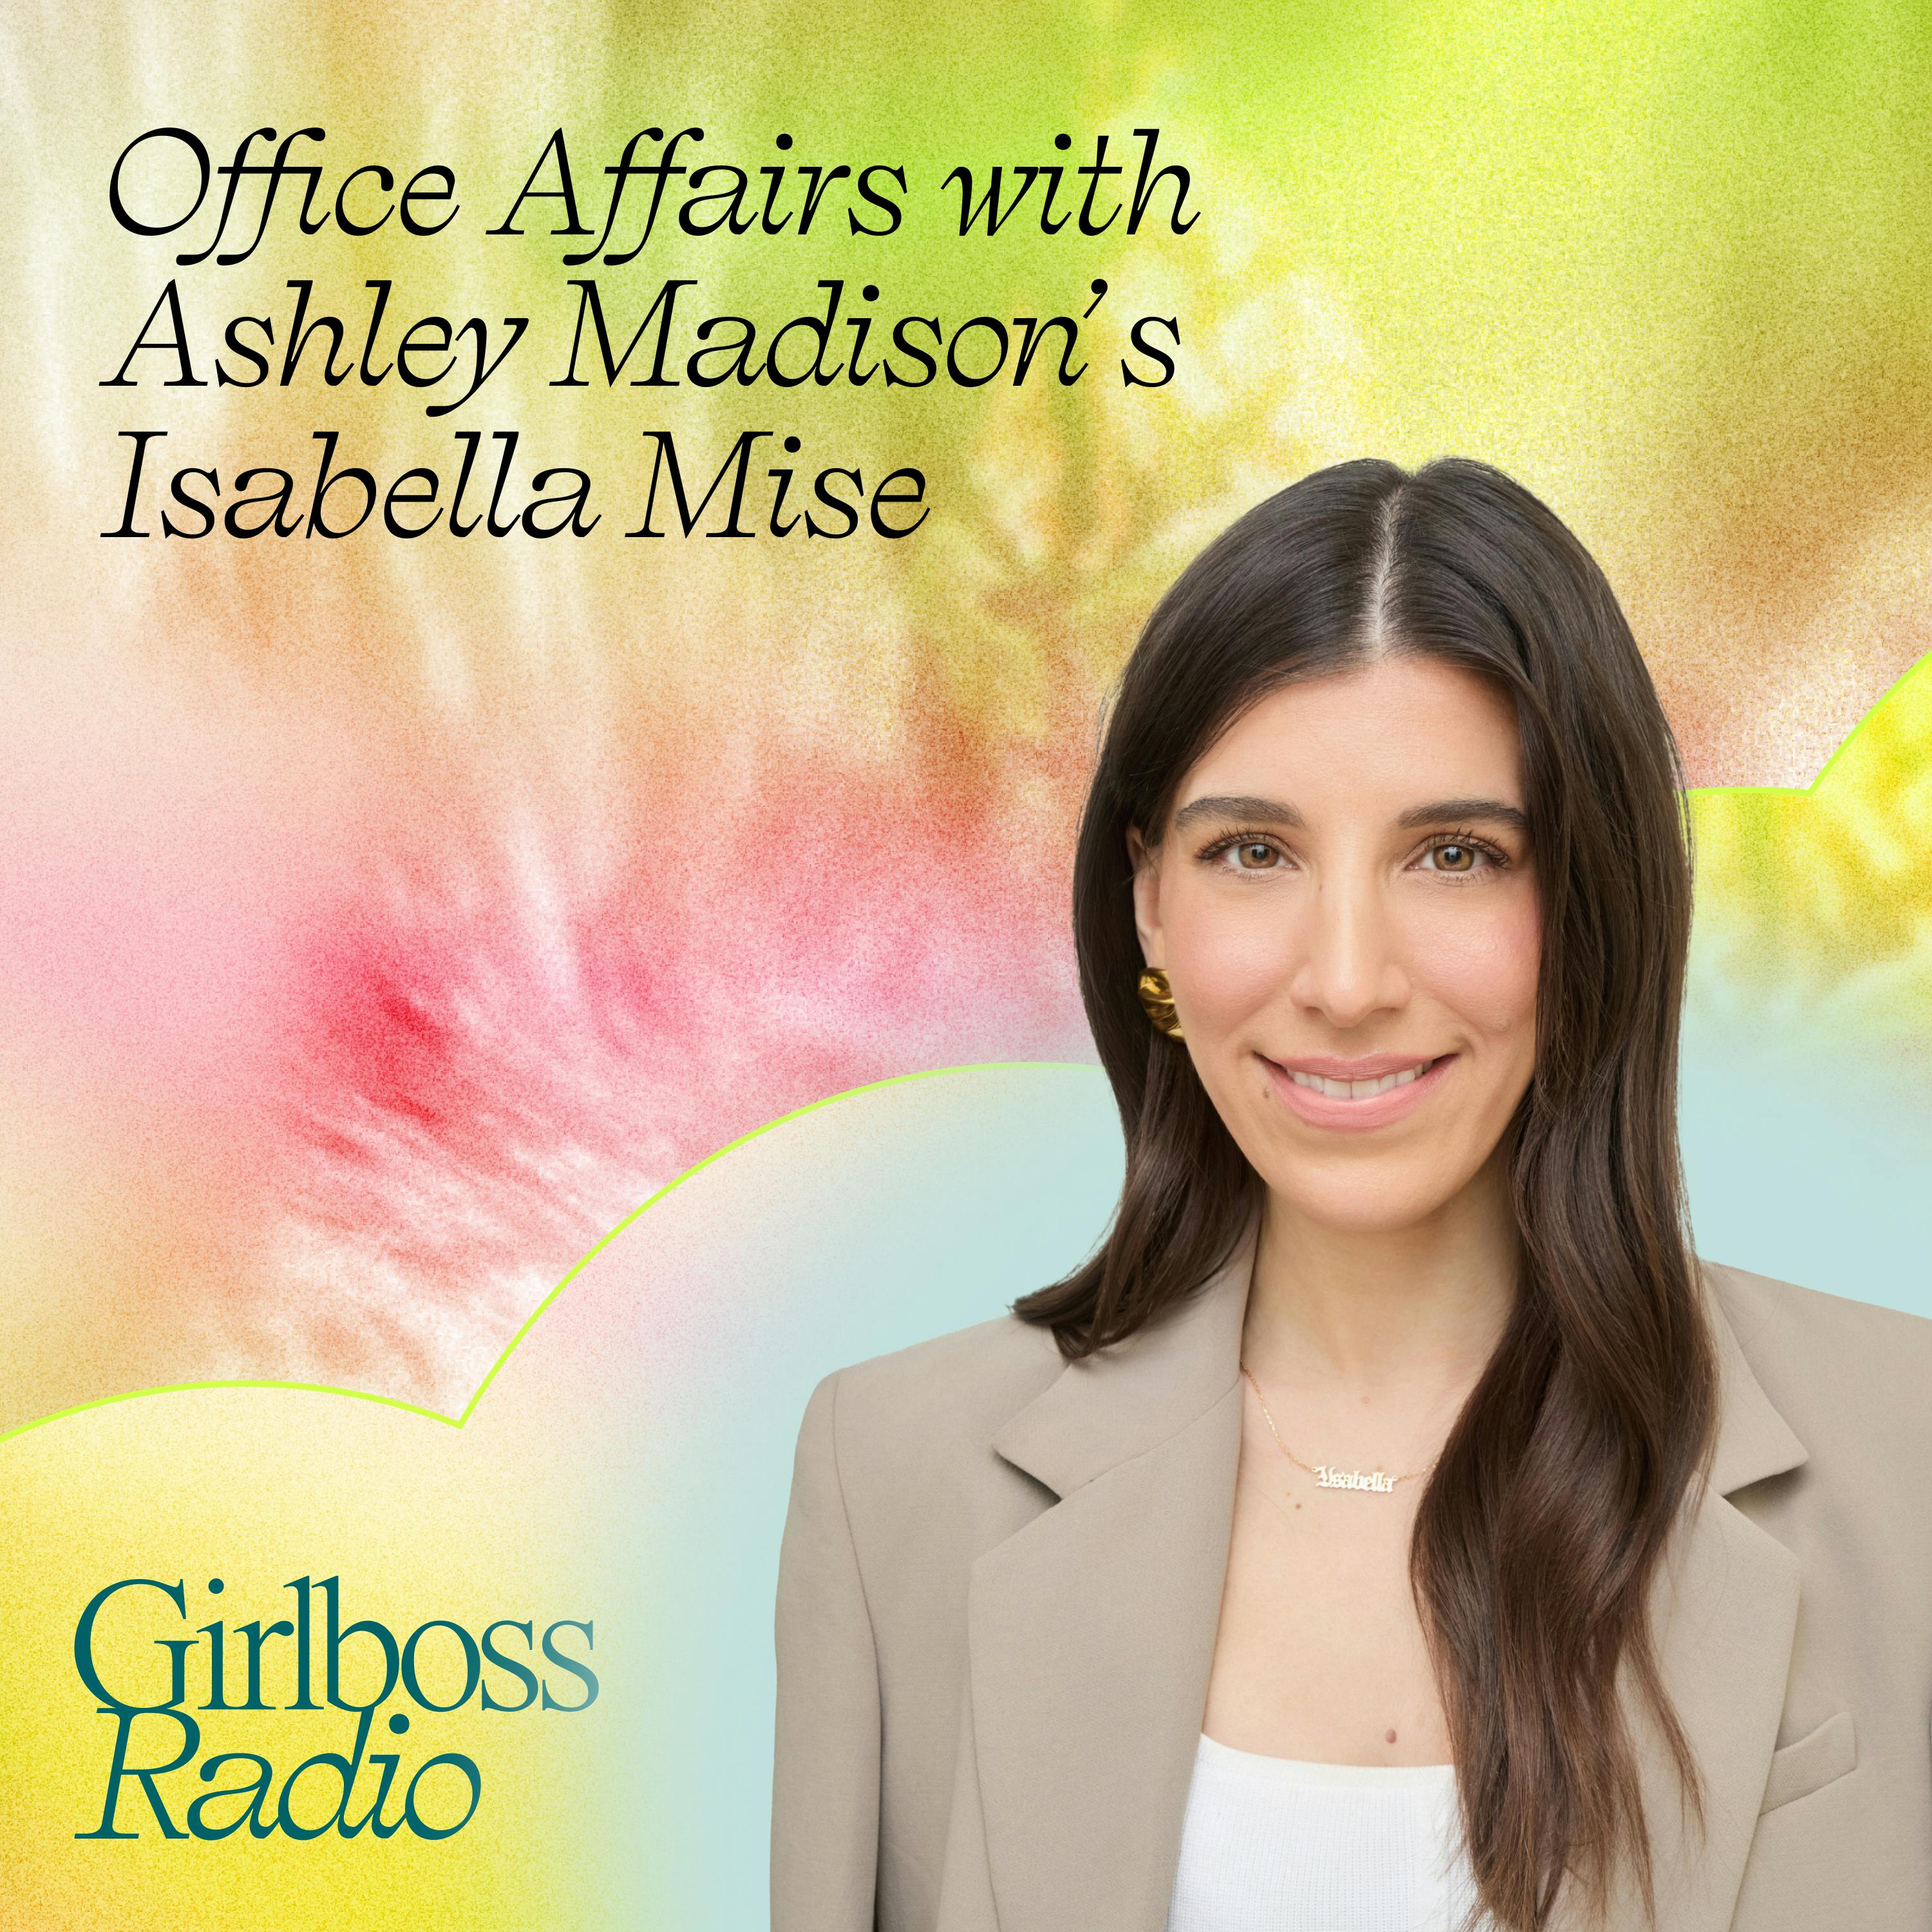 Office Affairs with Ashley Madison’s Isabella Mise